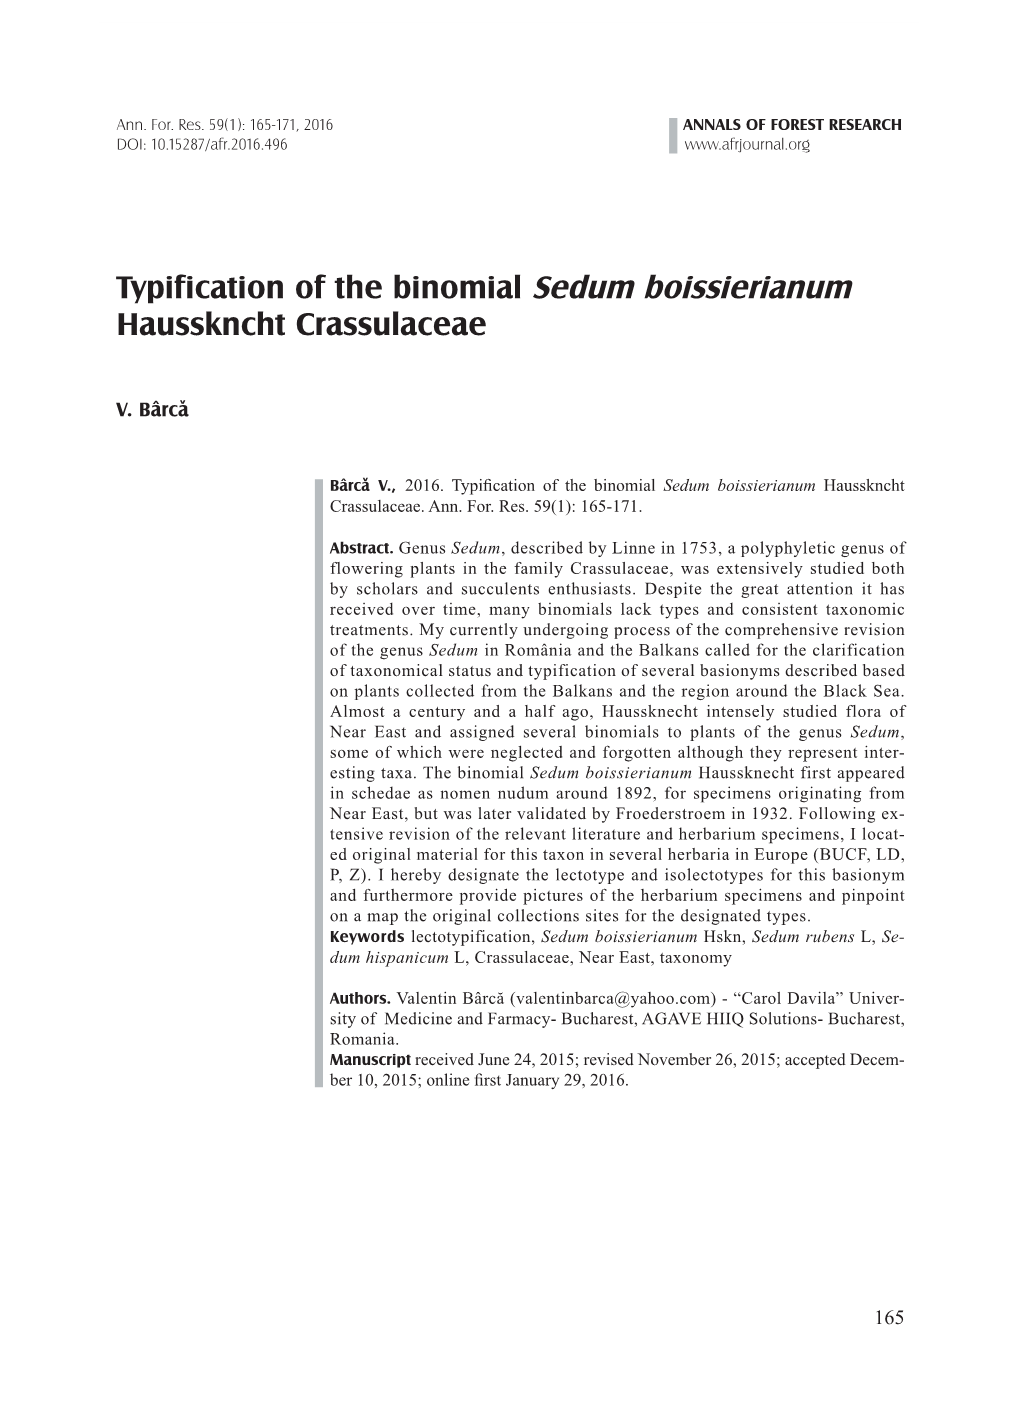 Typification of the Binomial Sedum Boissierianum Hausskncht Crassulaceae